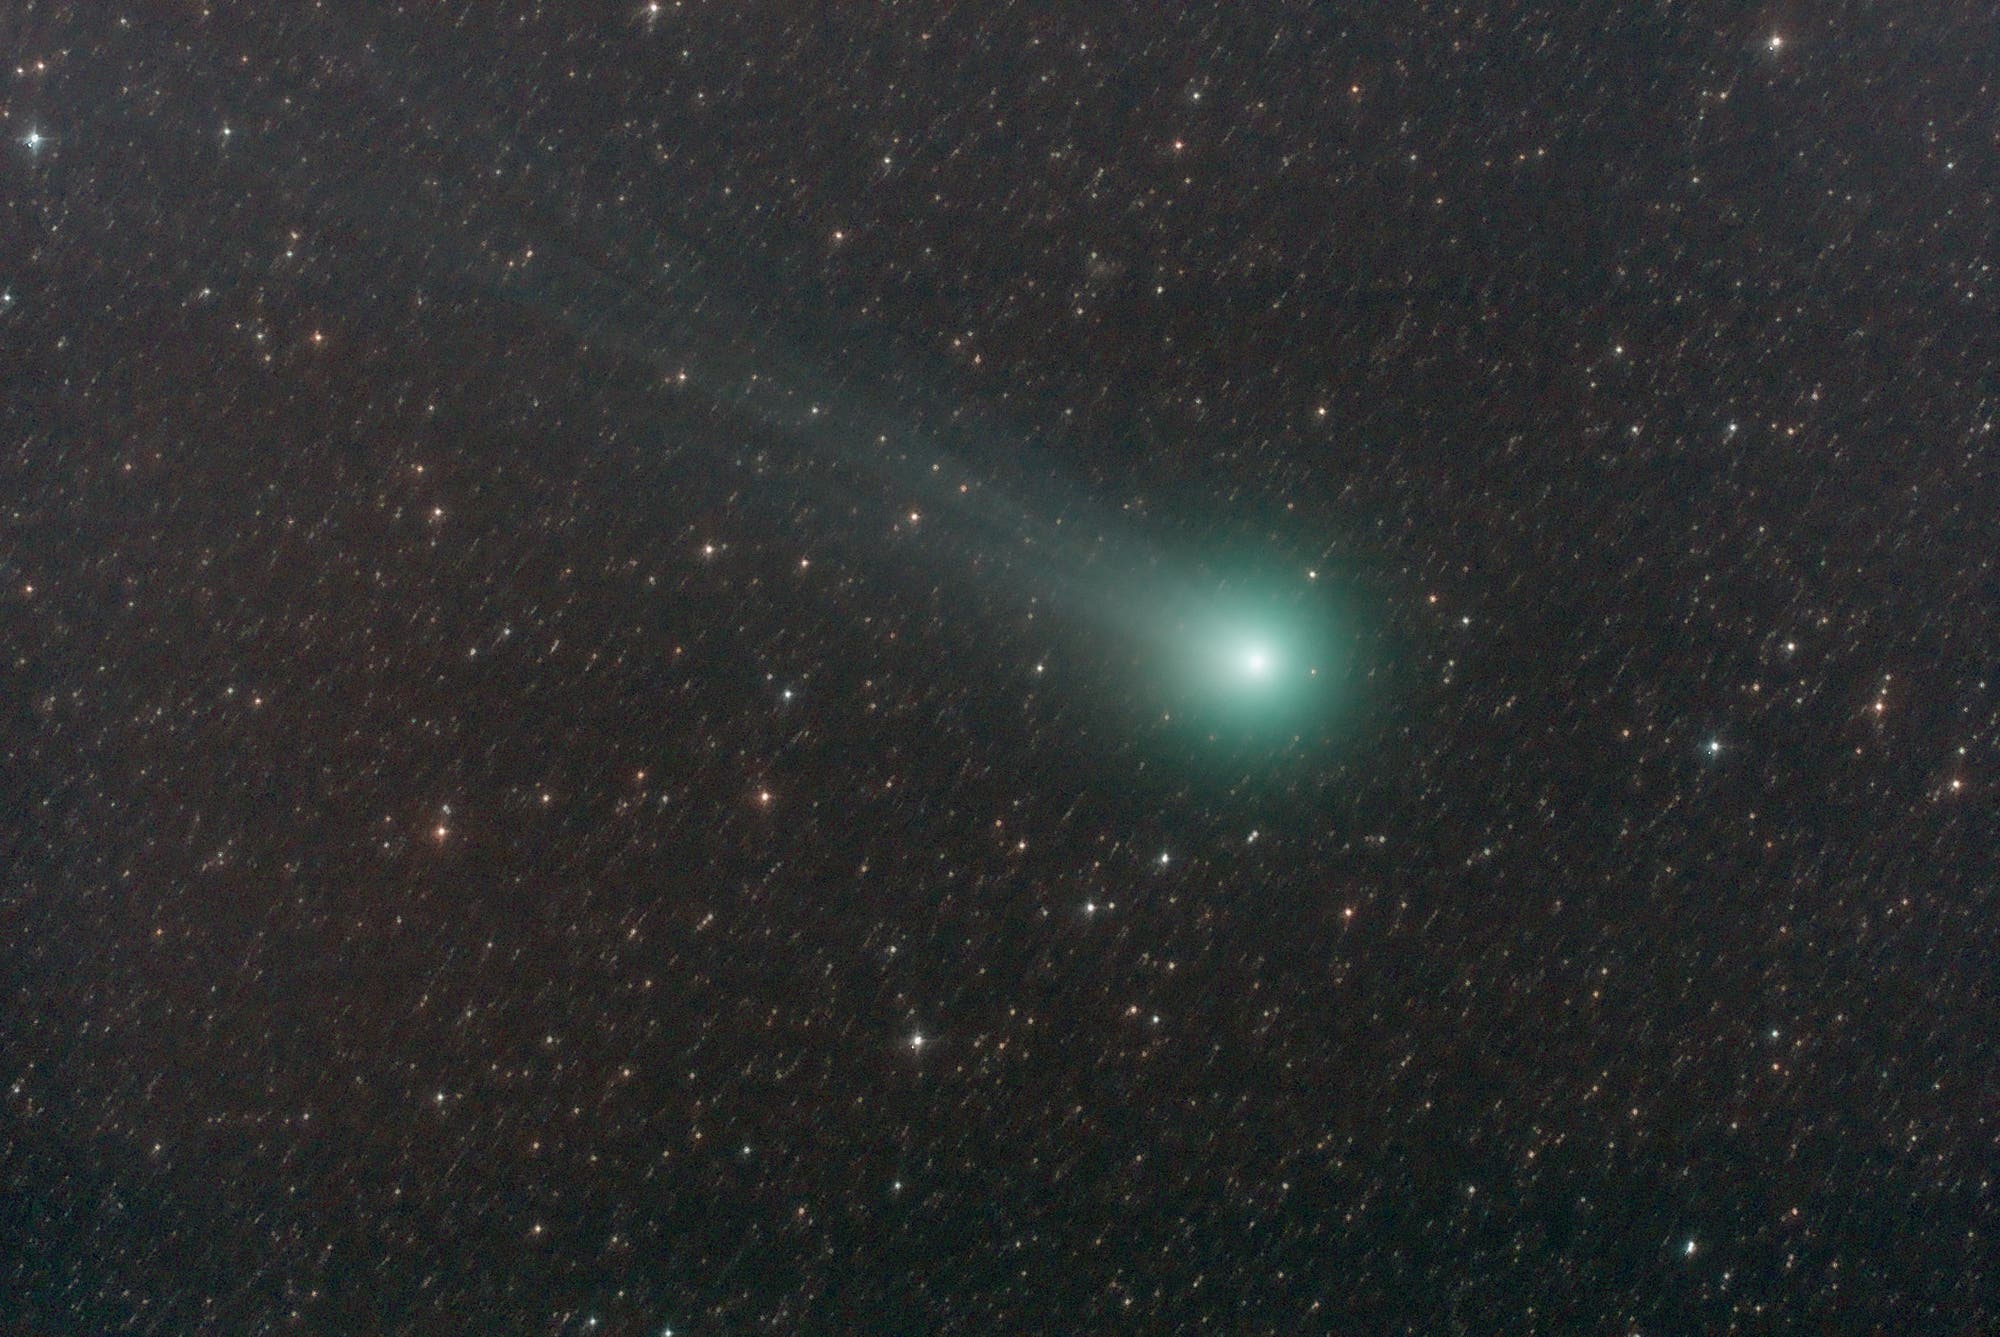 Komet C/2014 Q2 Lovejoy am 10. Februar 2015